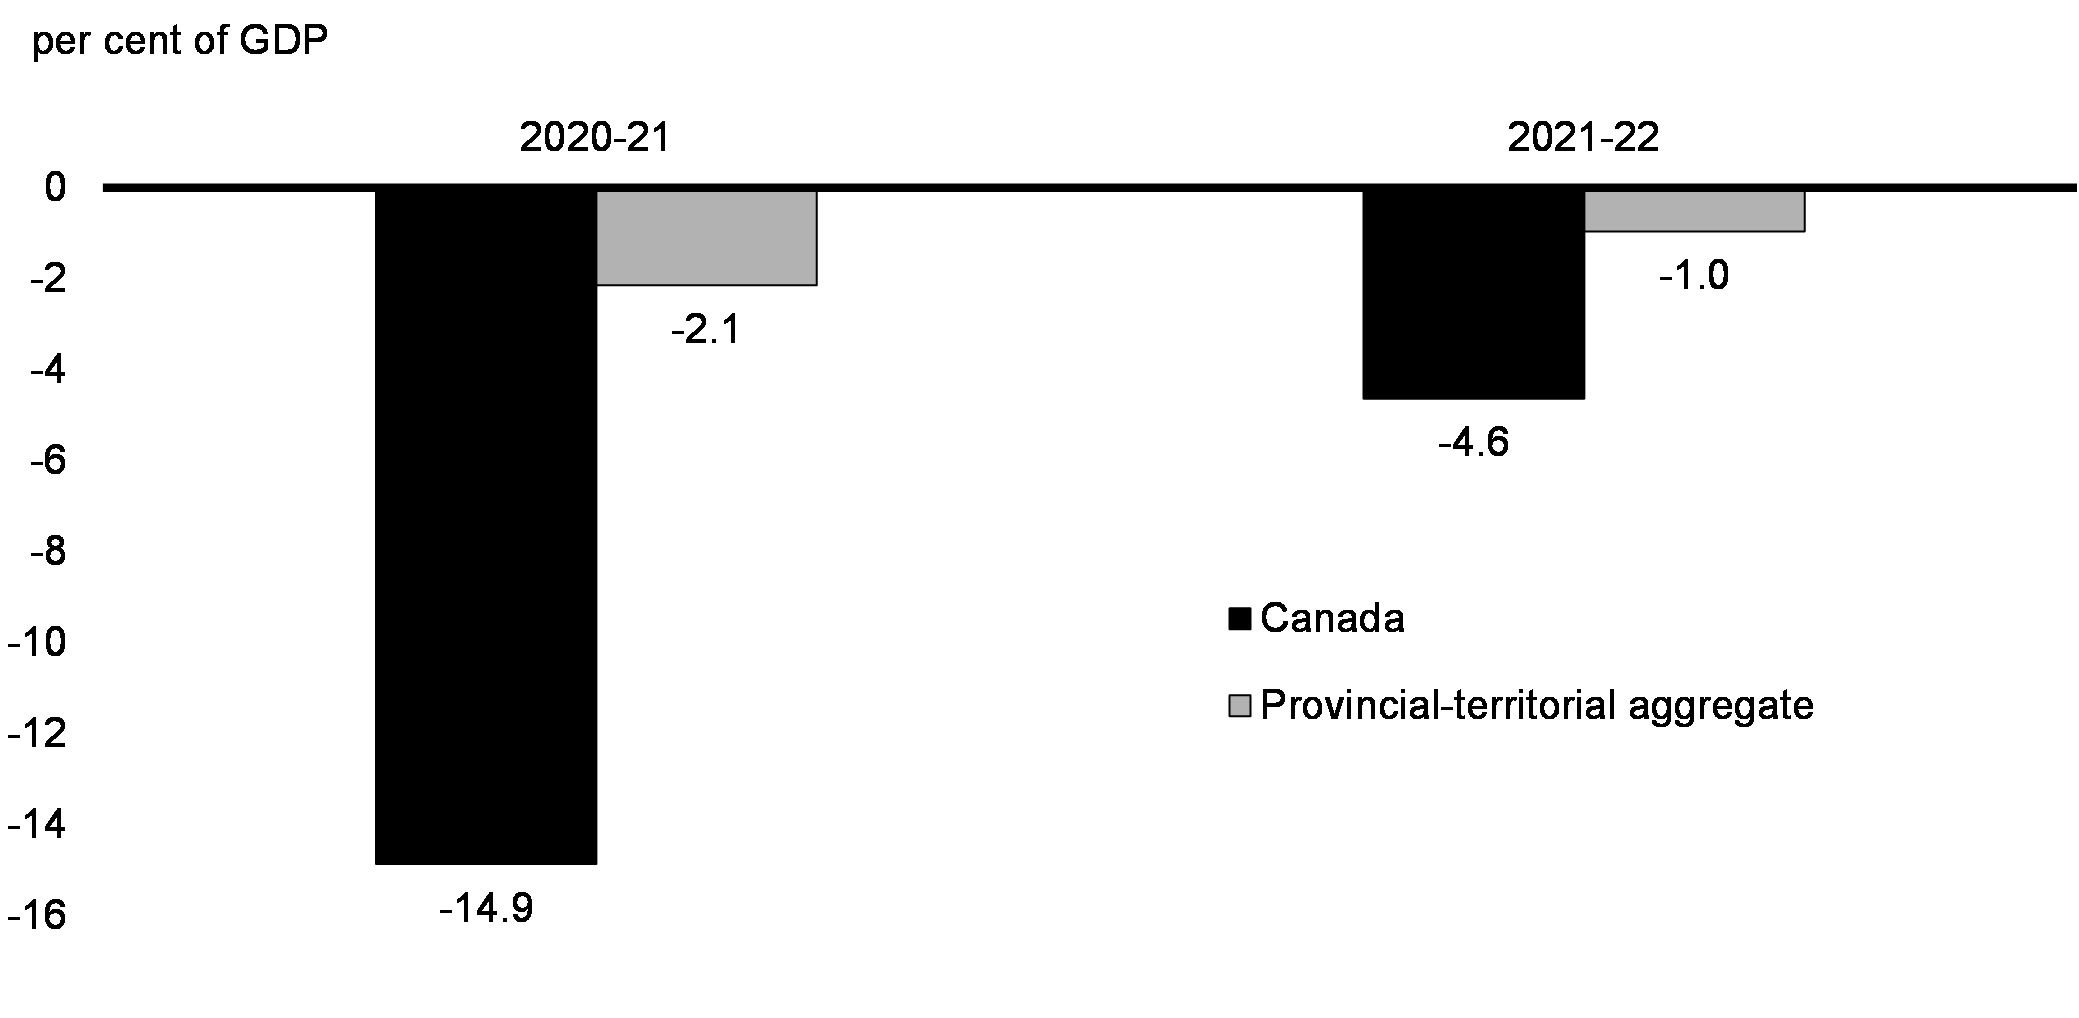 Chart 20: Budgetary Balances, Canada and Provincial-Territorial Aggregate 